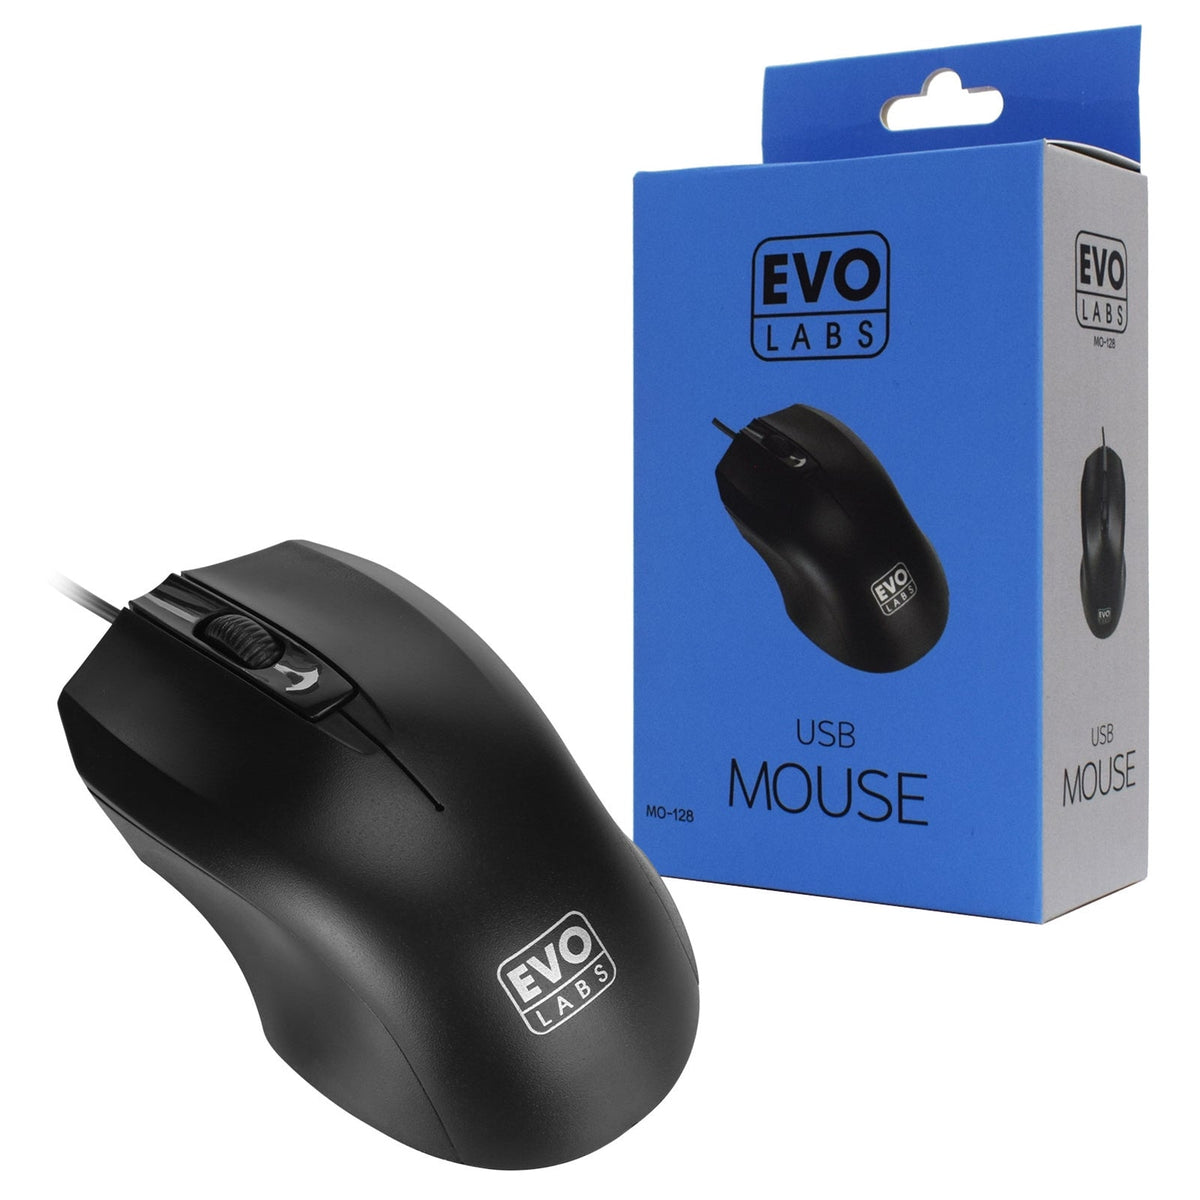 Evo Labs MO-128 mouse Ambidextrous USB Type-A Optical 800 DPI